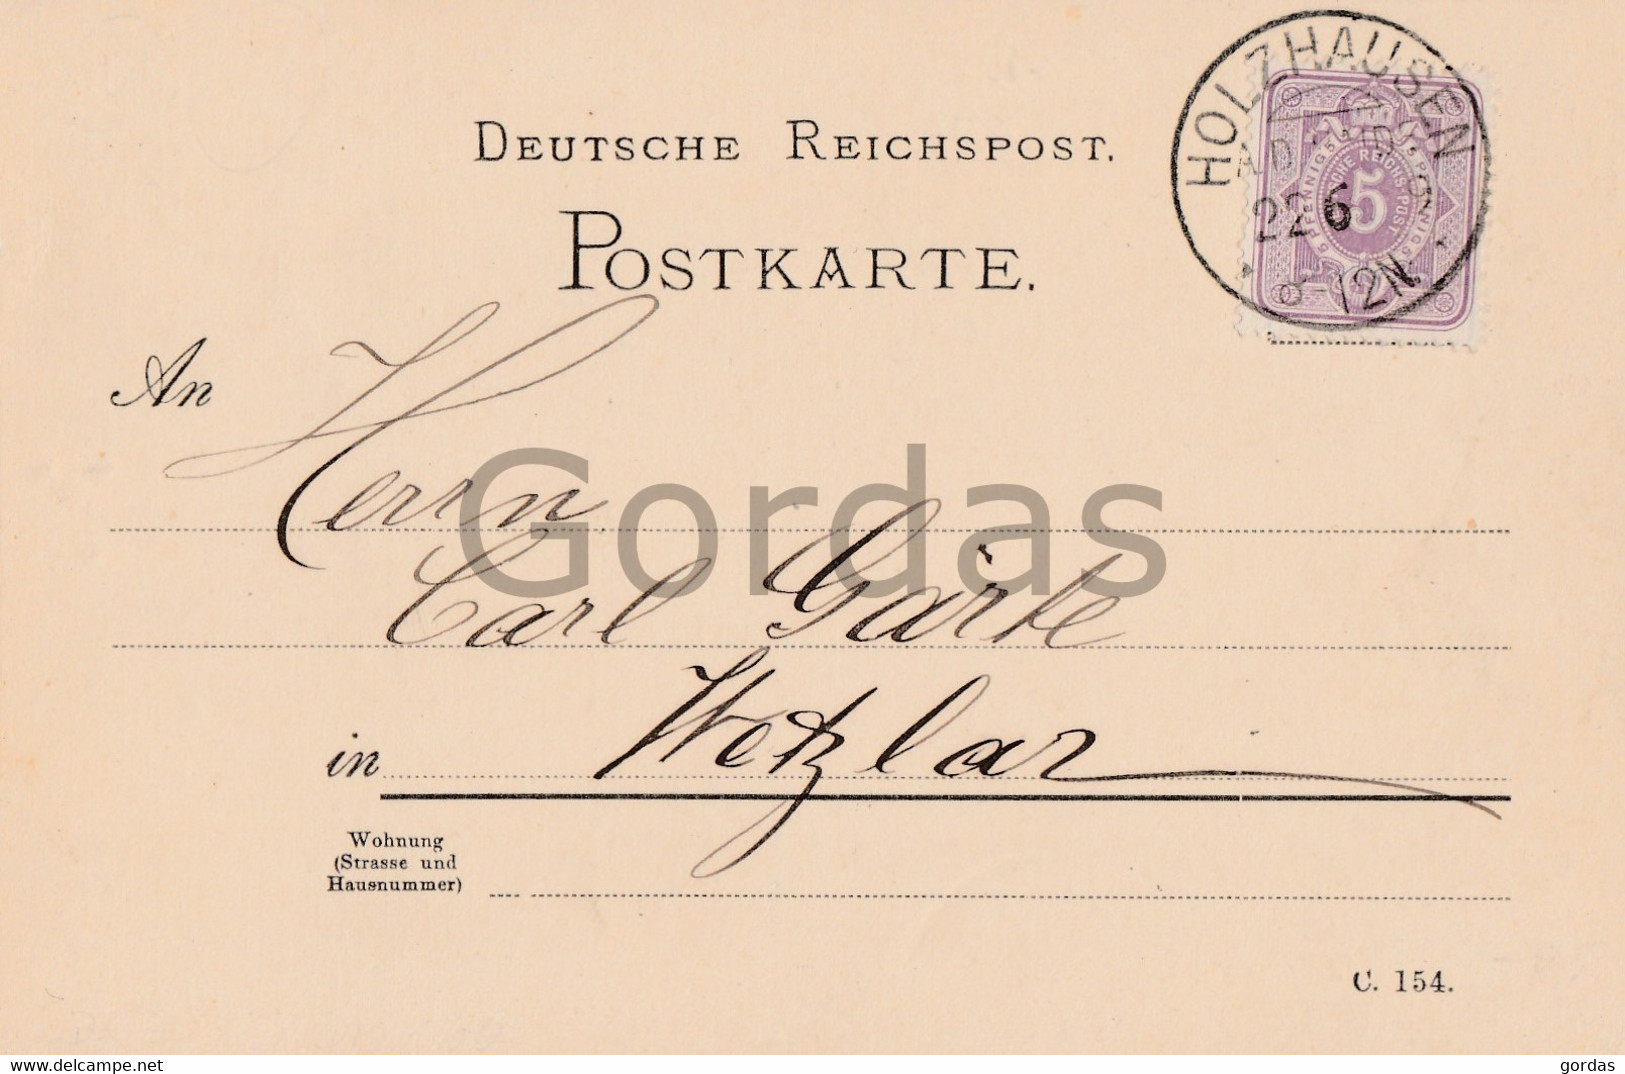 Germany - Holzhausen - Menen - Neuhof - Werbung - 1889 - Rhein-Hunsrueck-Kreis